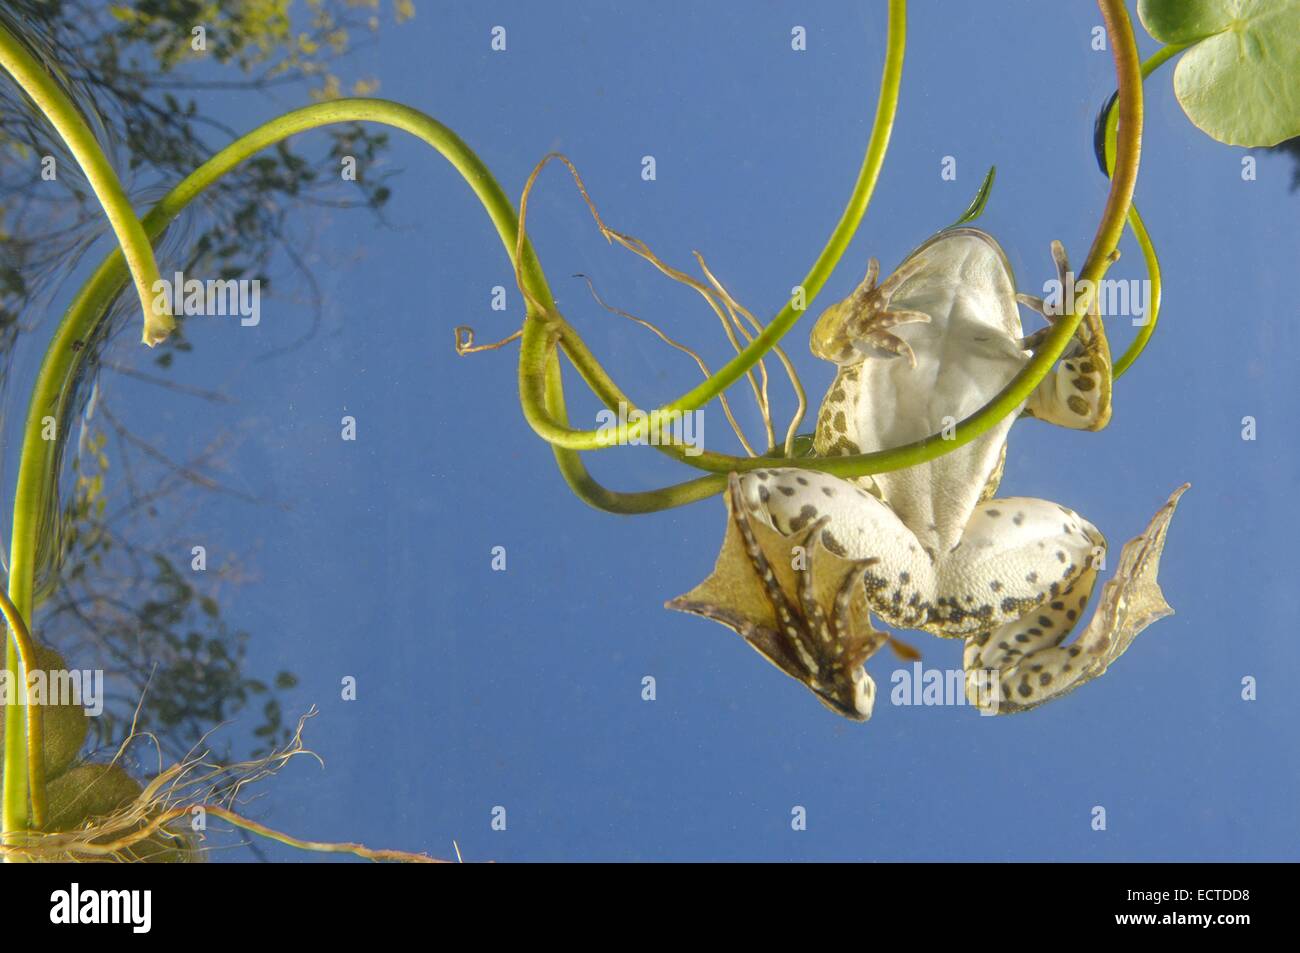 Rana di palude (Rana ridibunda - Pelophylax ridibundus) galleggianti in superficie tra waterlilies vista subacquea Foto Stock